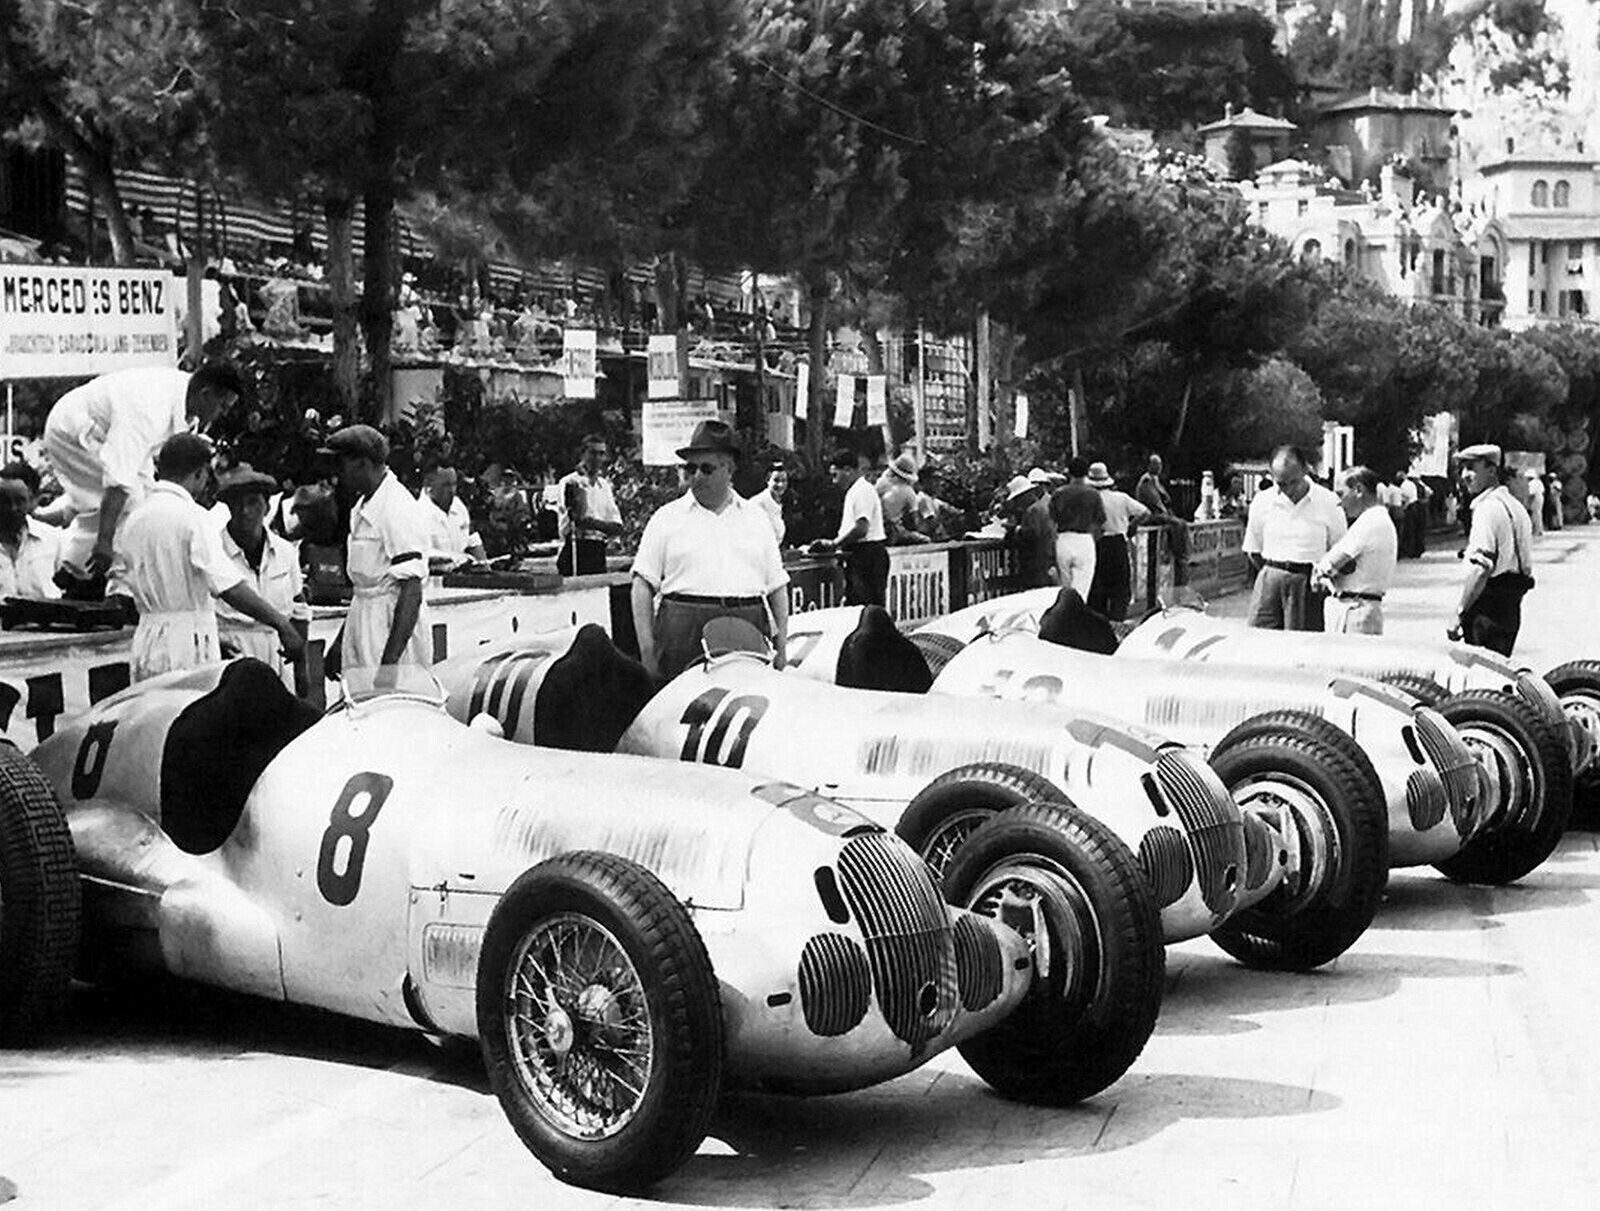 1937 TEAM MERCEDES-BENZ Monaco Grand Prix Classic Car Race Picture Photo 8.5x11